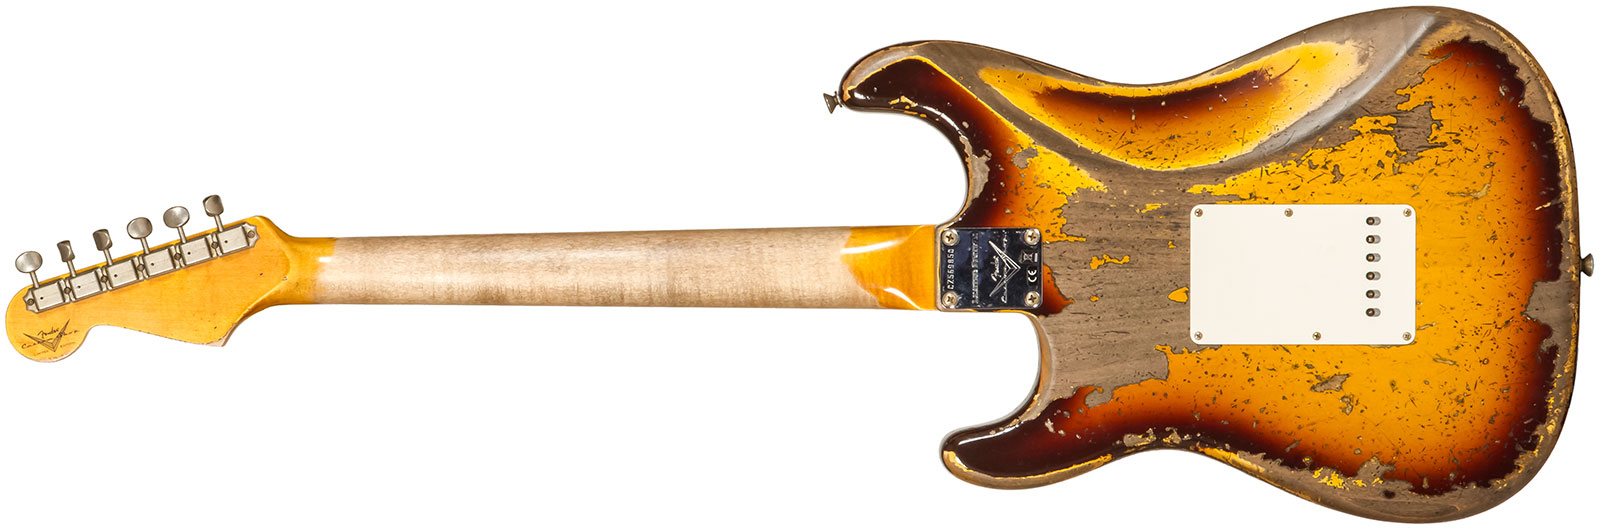 Fender Custom Shop Strat 1959 3s Trem Rw #cz569850 - Super Heavy Relic Aged Chocolate 3-color Sunburst - E-Gitarre in Str-Form - Variation 1